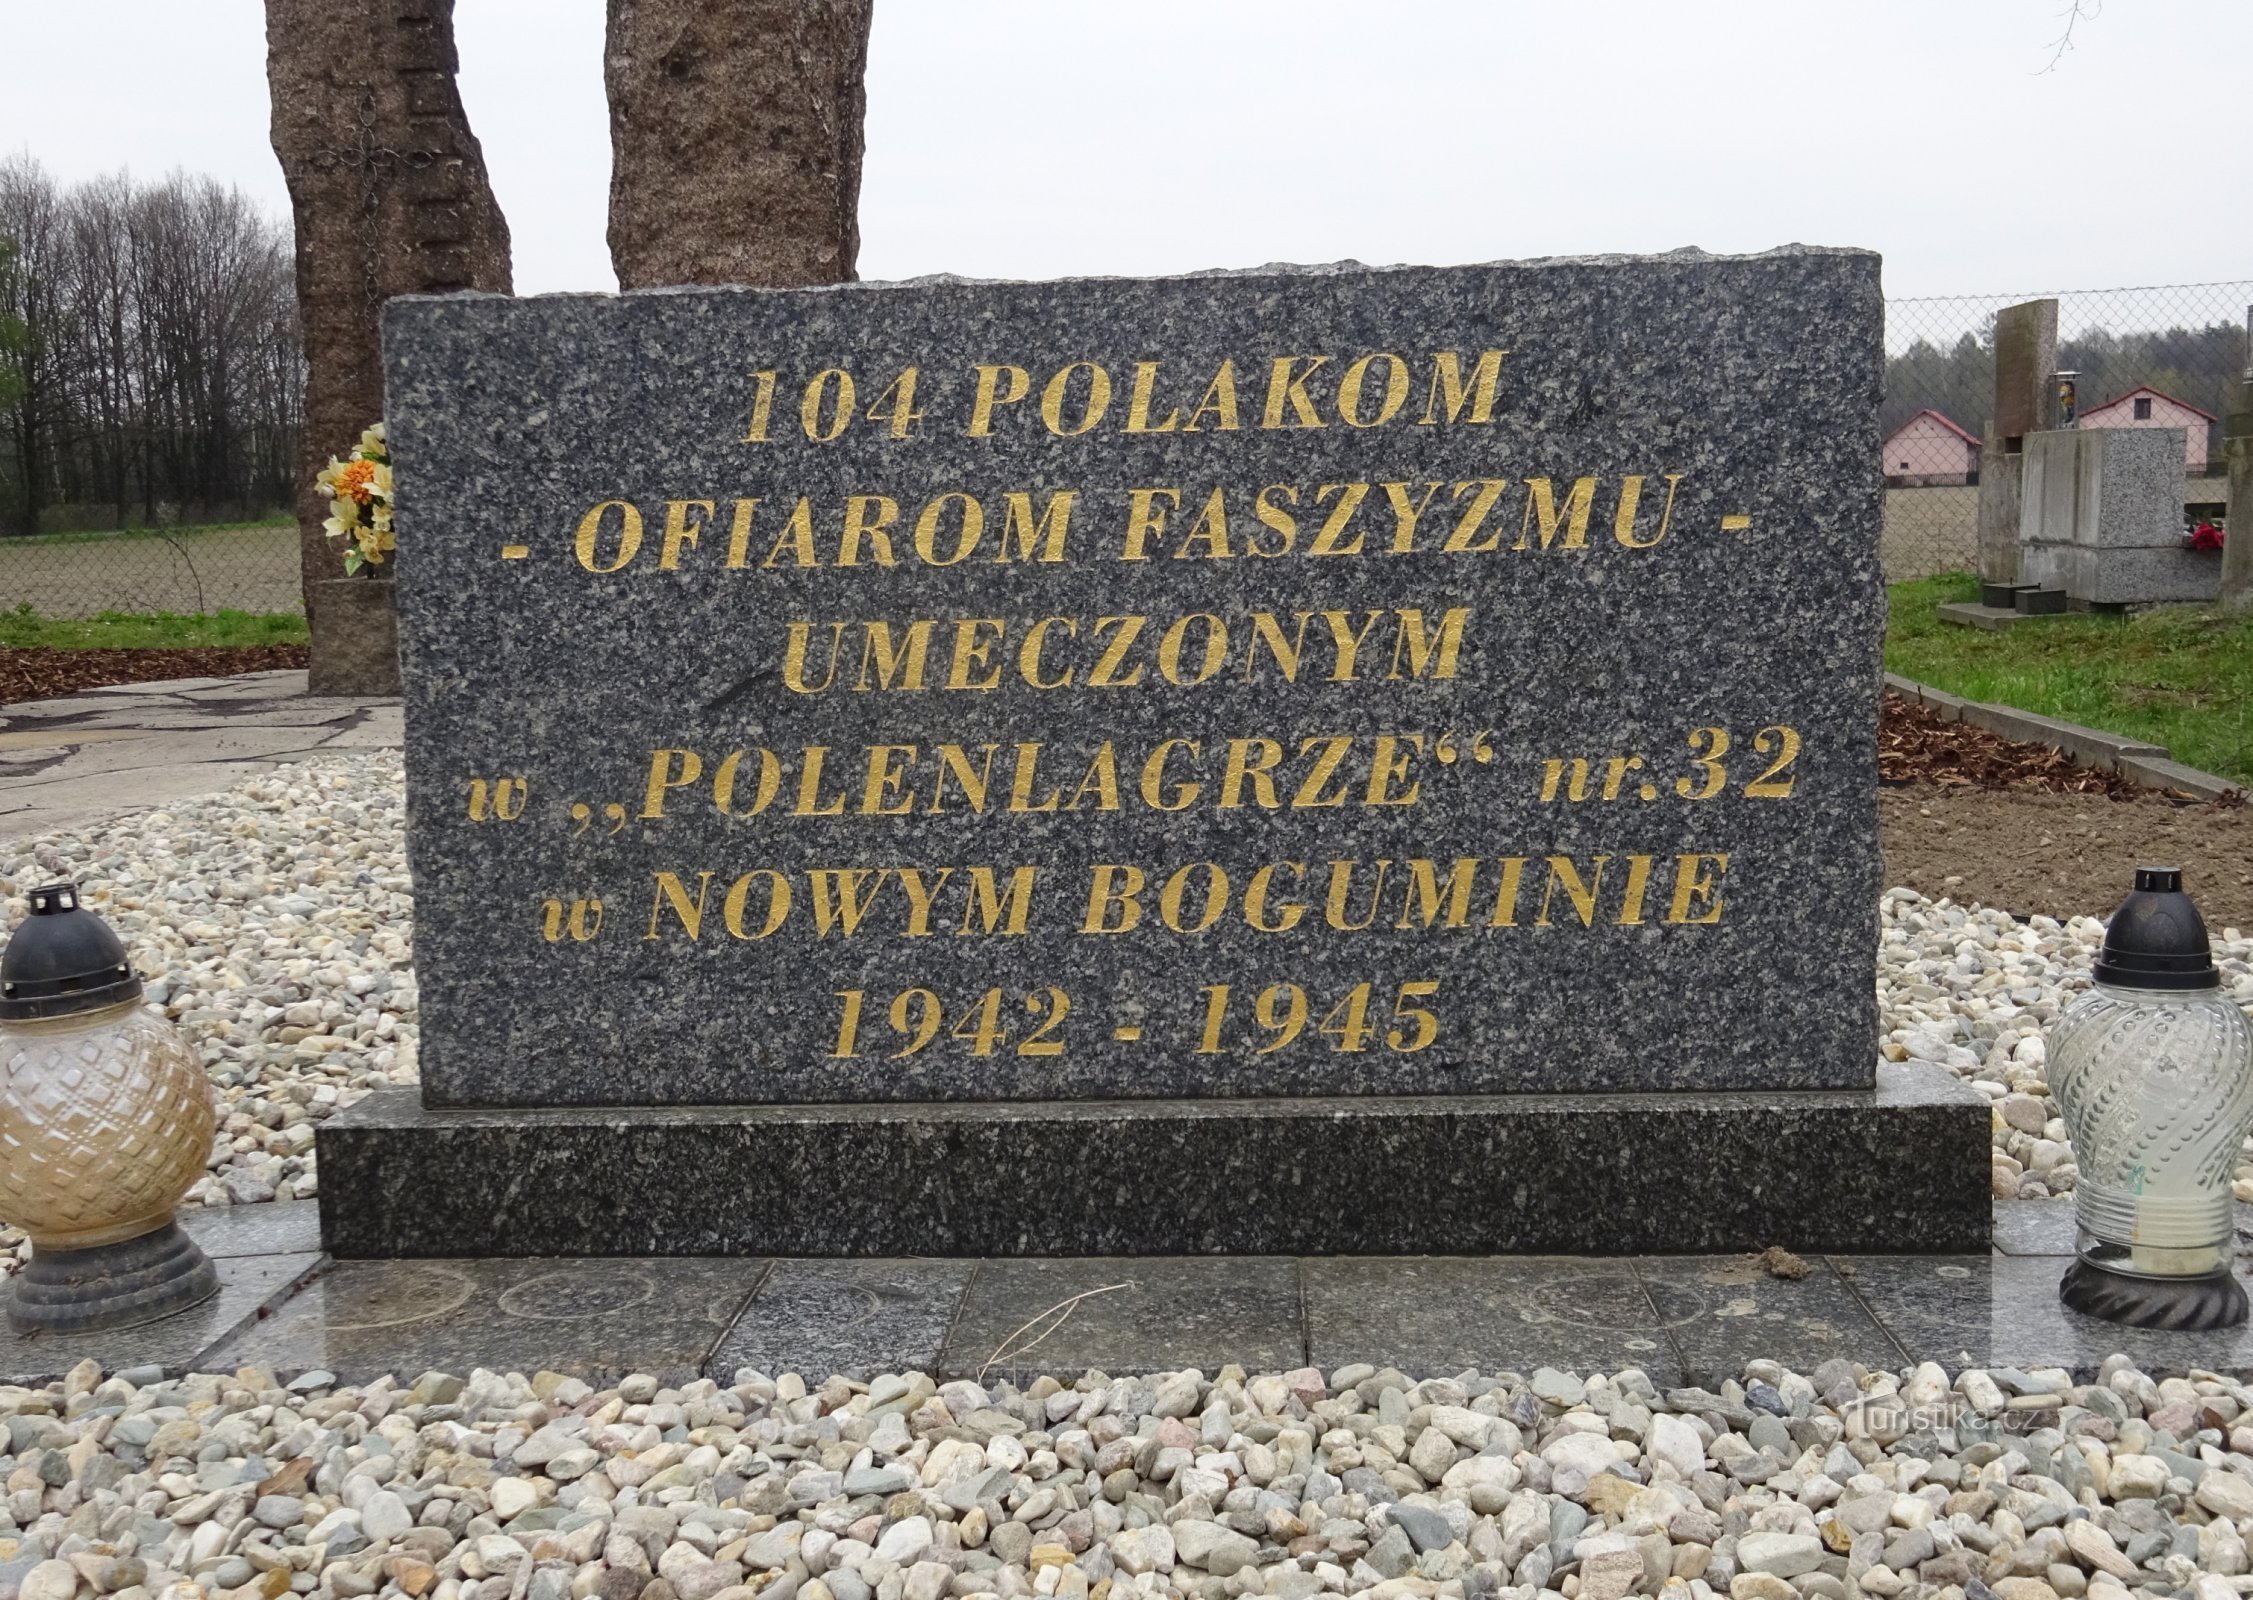 Богумін - Скречонь, пам'ятник 104 полякам